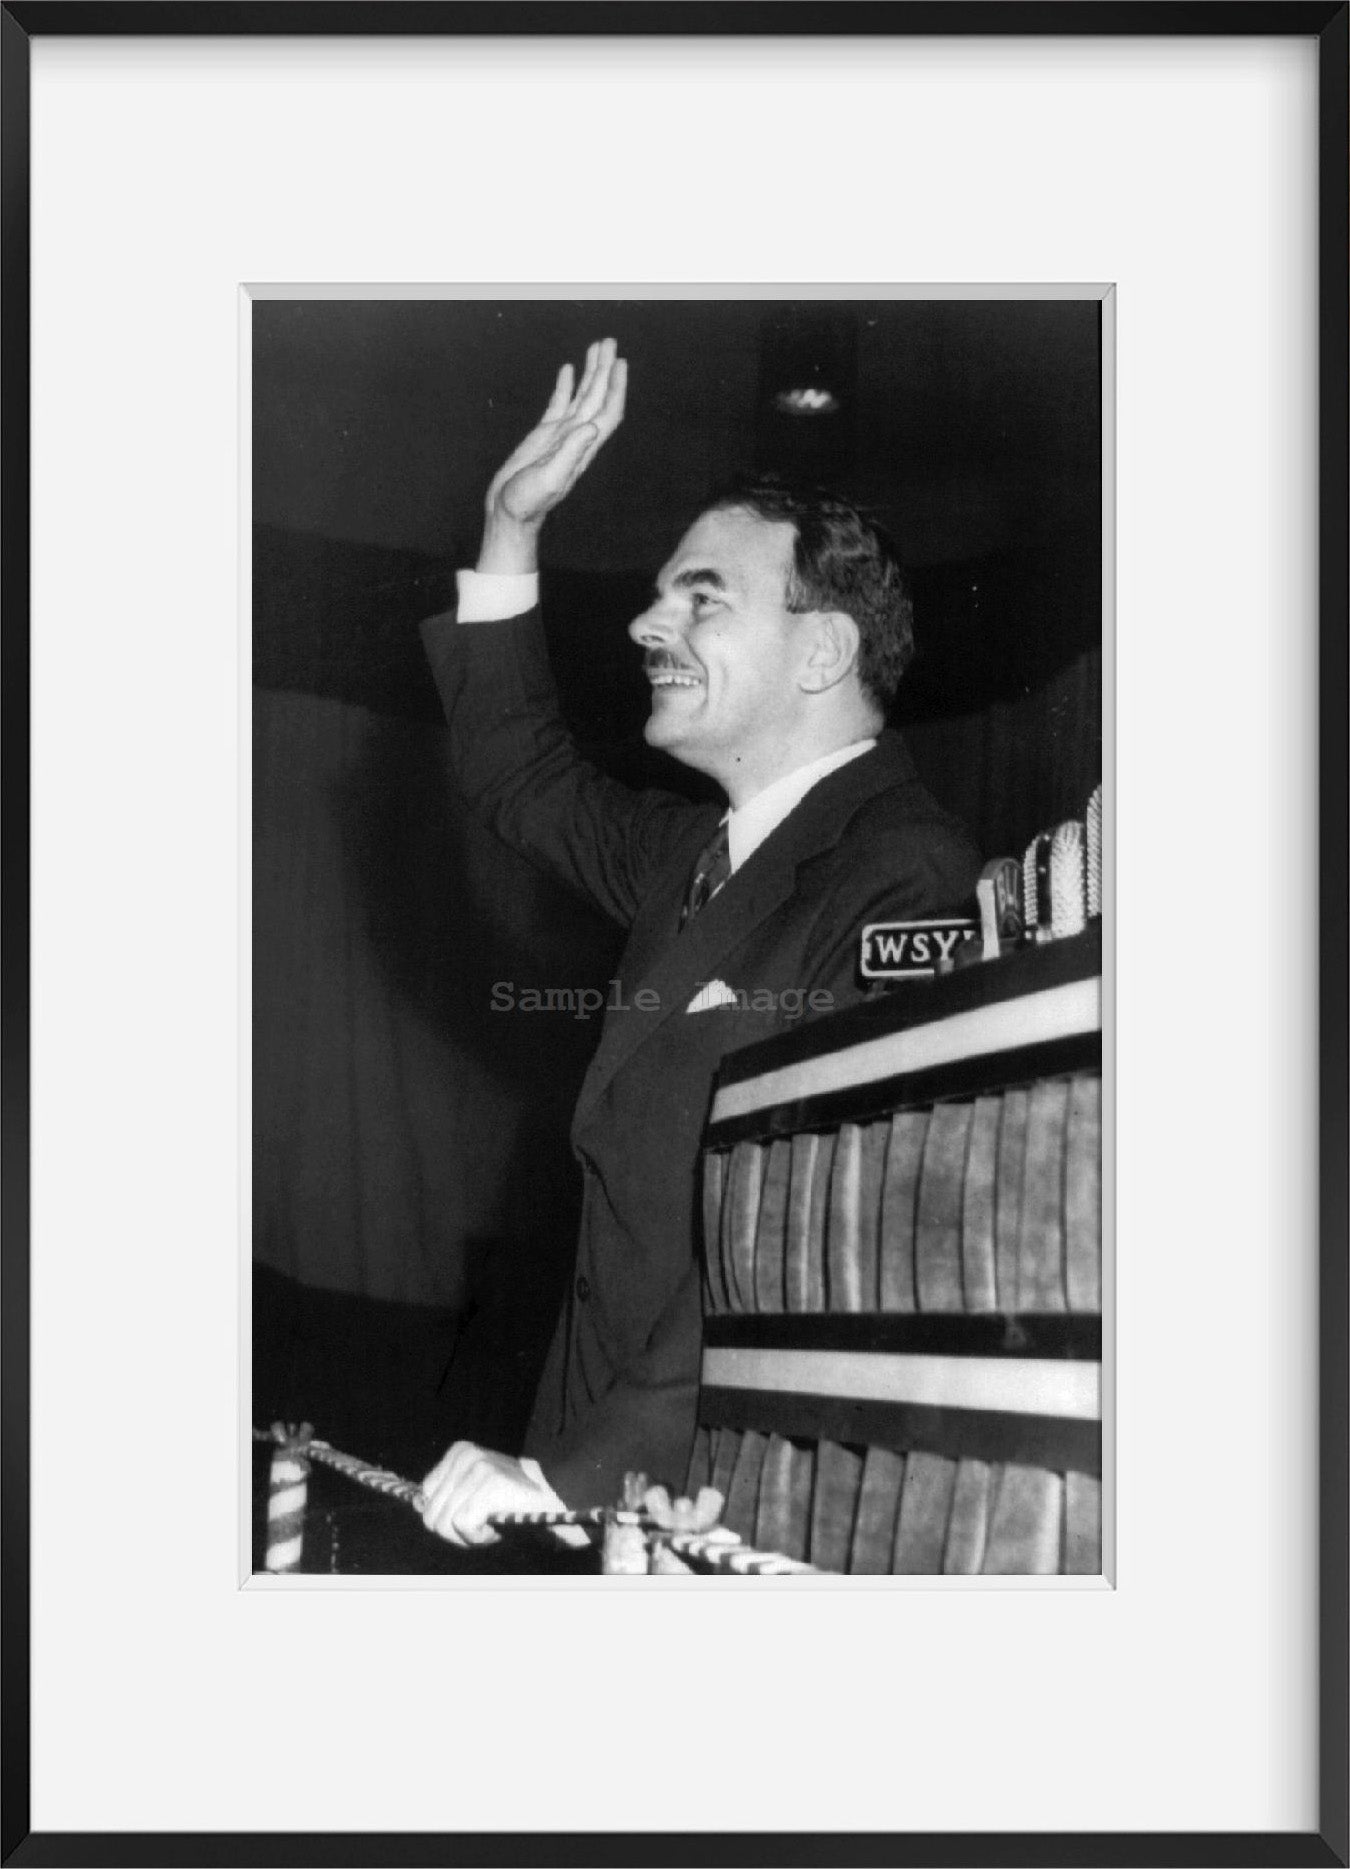 1944 photograph of Gov. Thomas E. Dewey, Pres. campaign, 1944